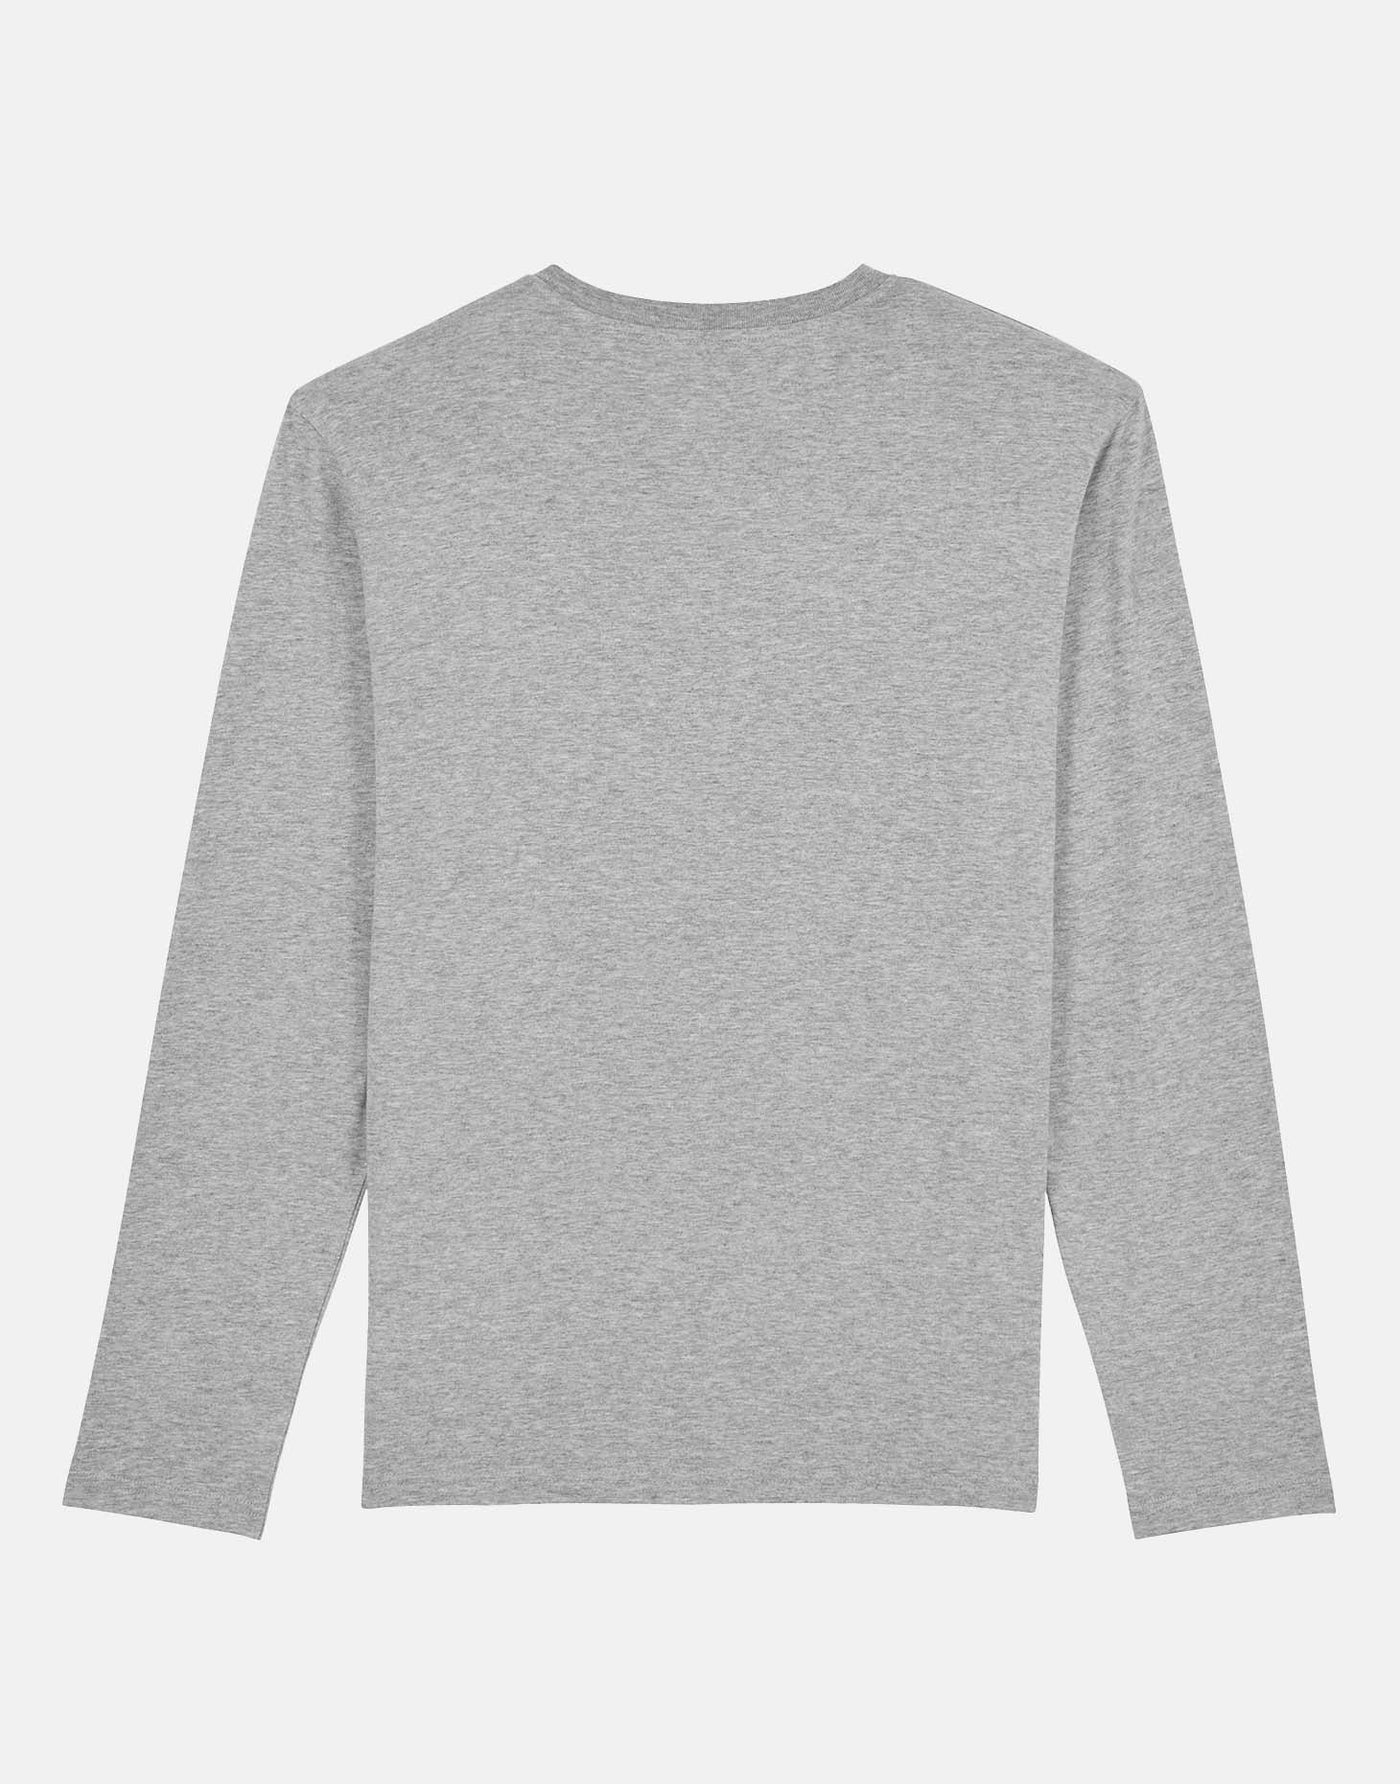 Men's Organic Cotton Jersey Long Sleeve T-Shirt – Grey Marl